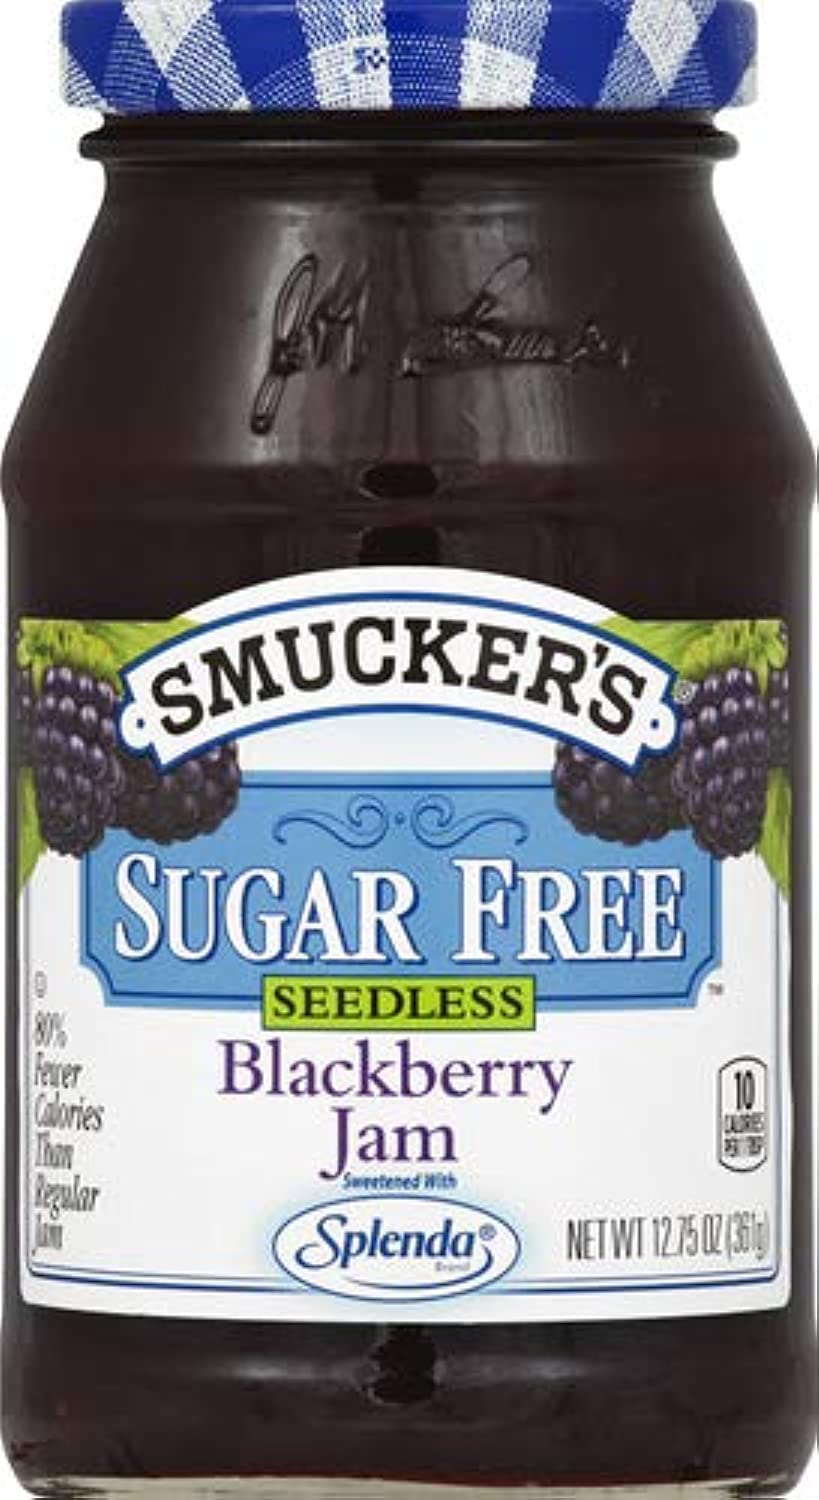 Smuckers Sugar Free Seedless Blackberry Jam 361g